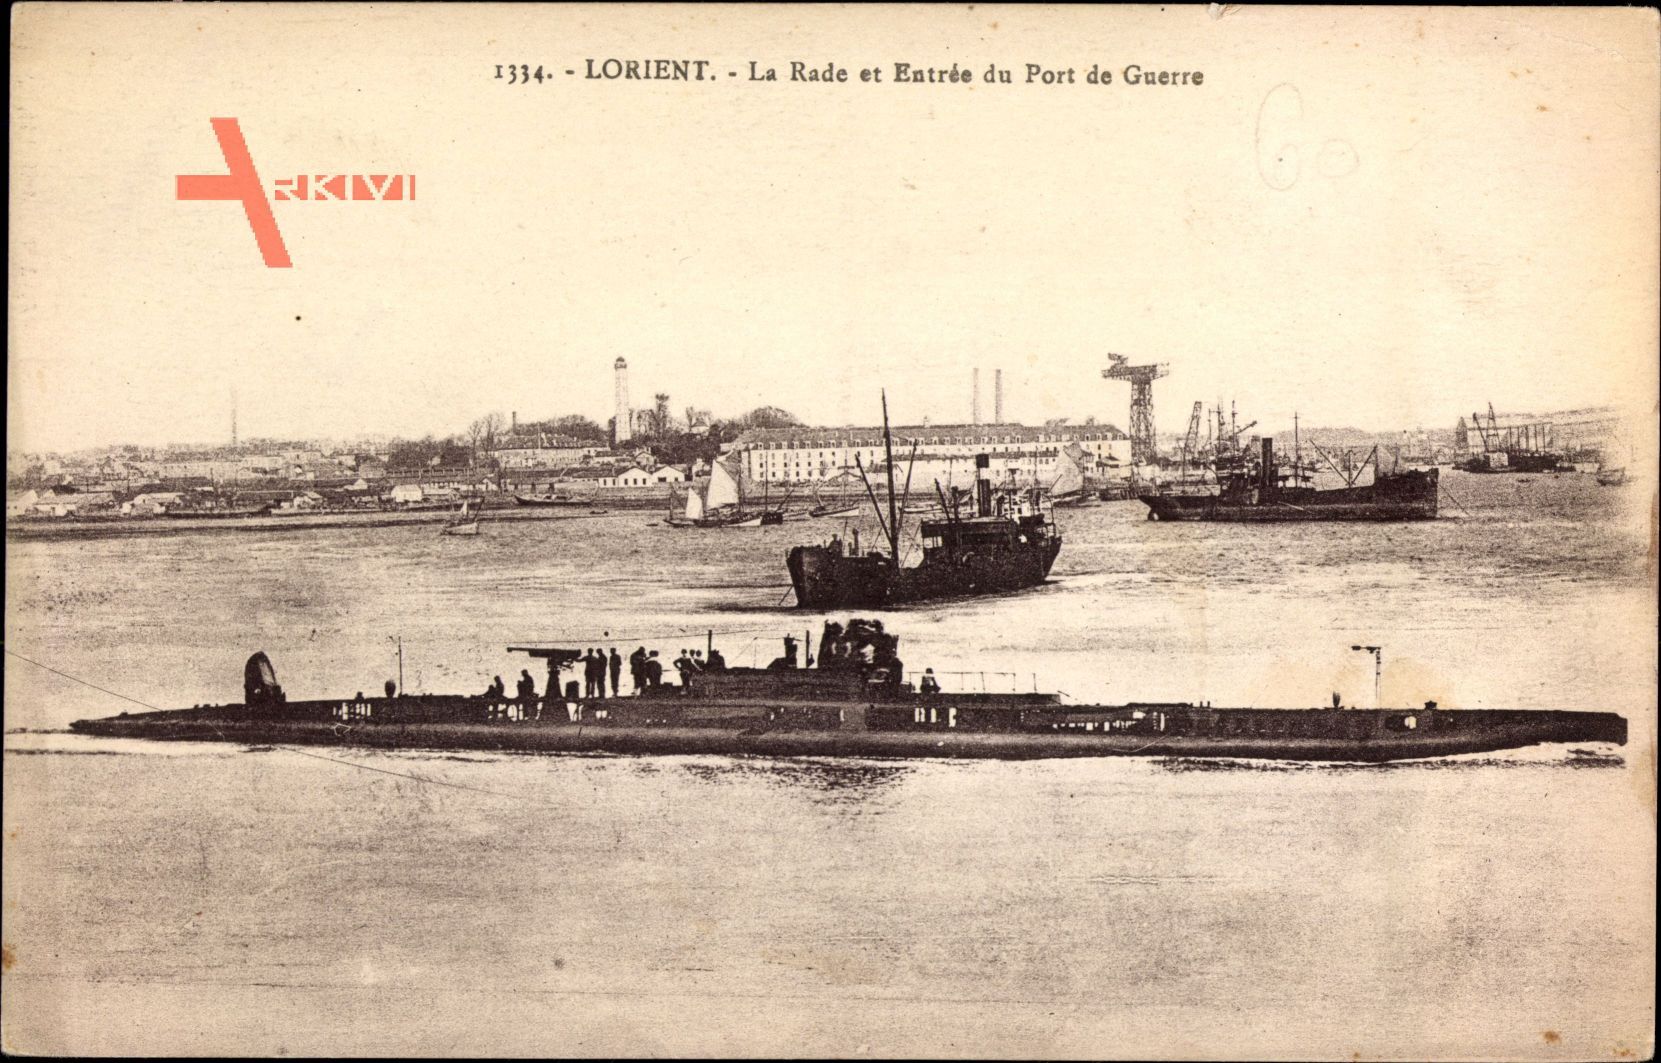 Lorient Morbihan, La Rade et Entree du Port de Guerre, Französisches Uboot